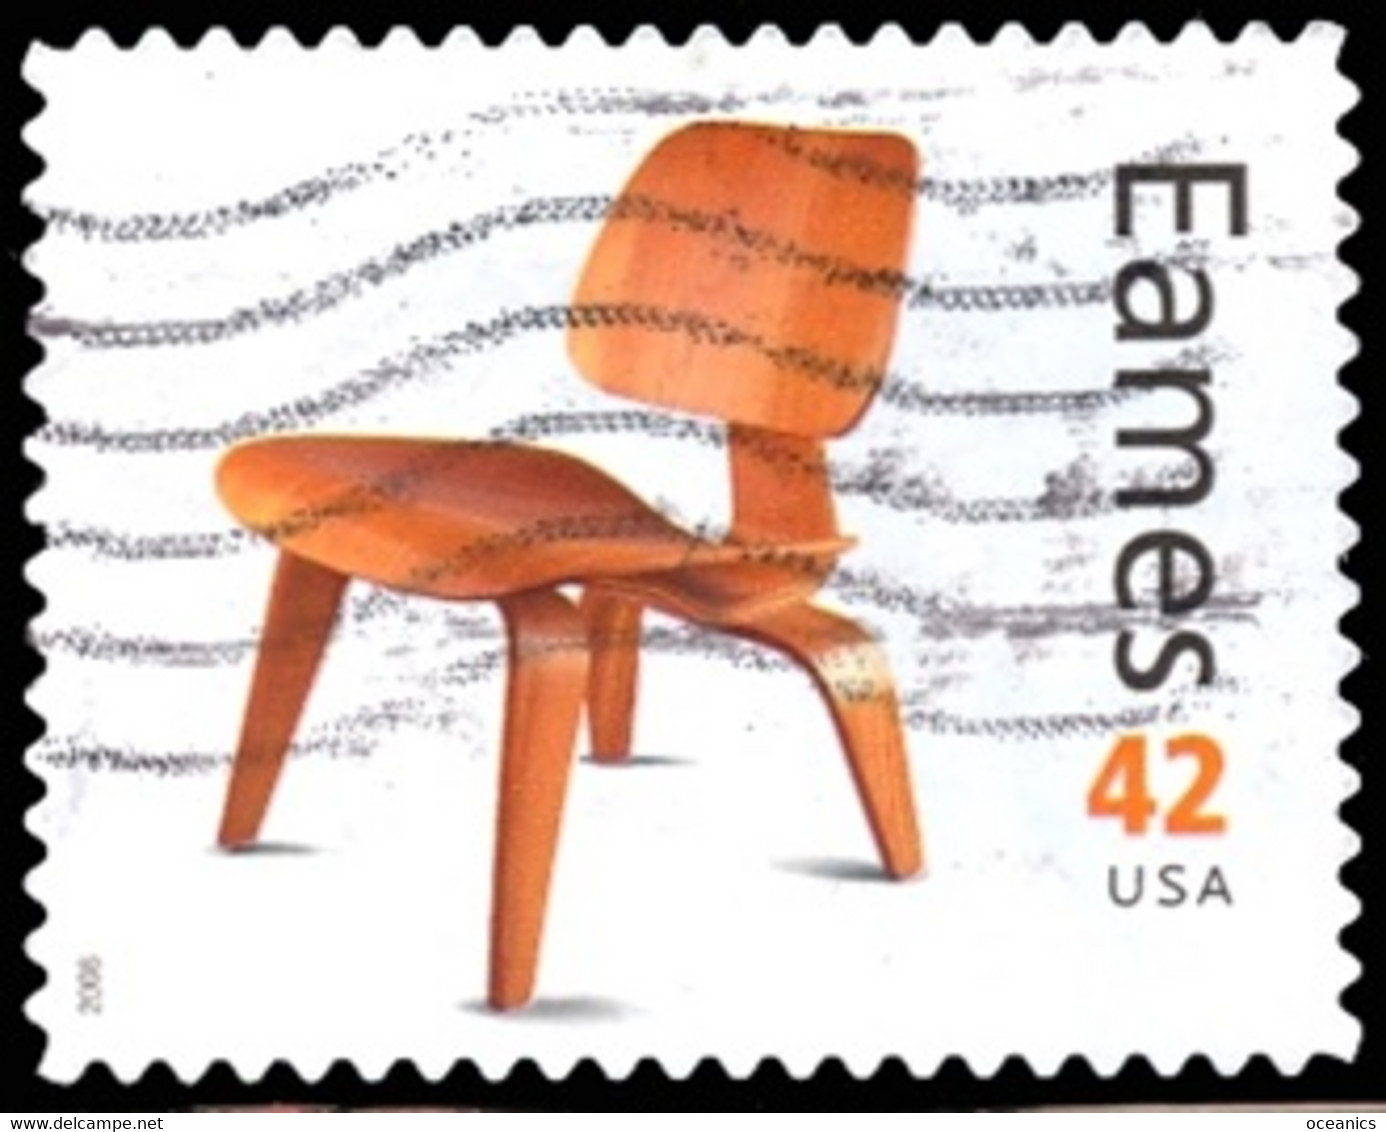 Etats-Unis / United States (Scott No.4333p - Charles & Ray Eames) (o) - Usados